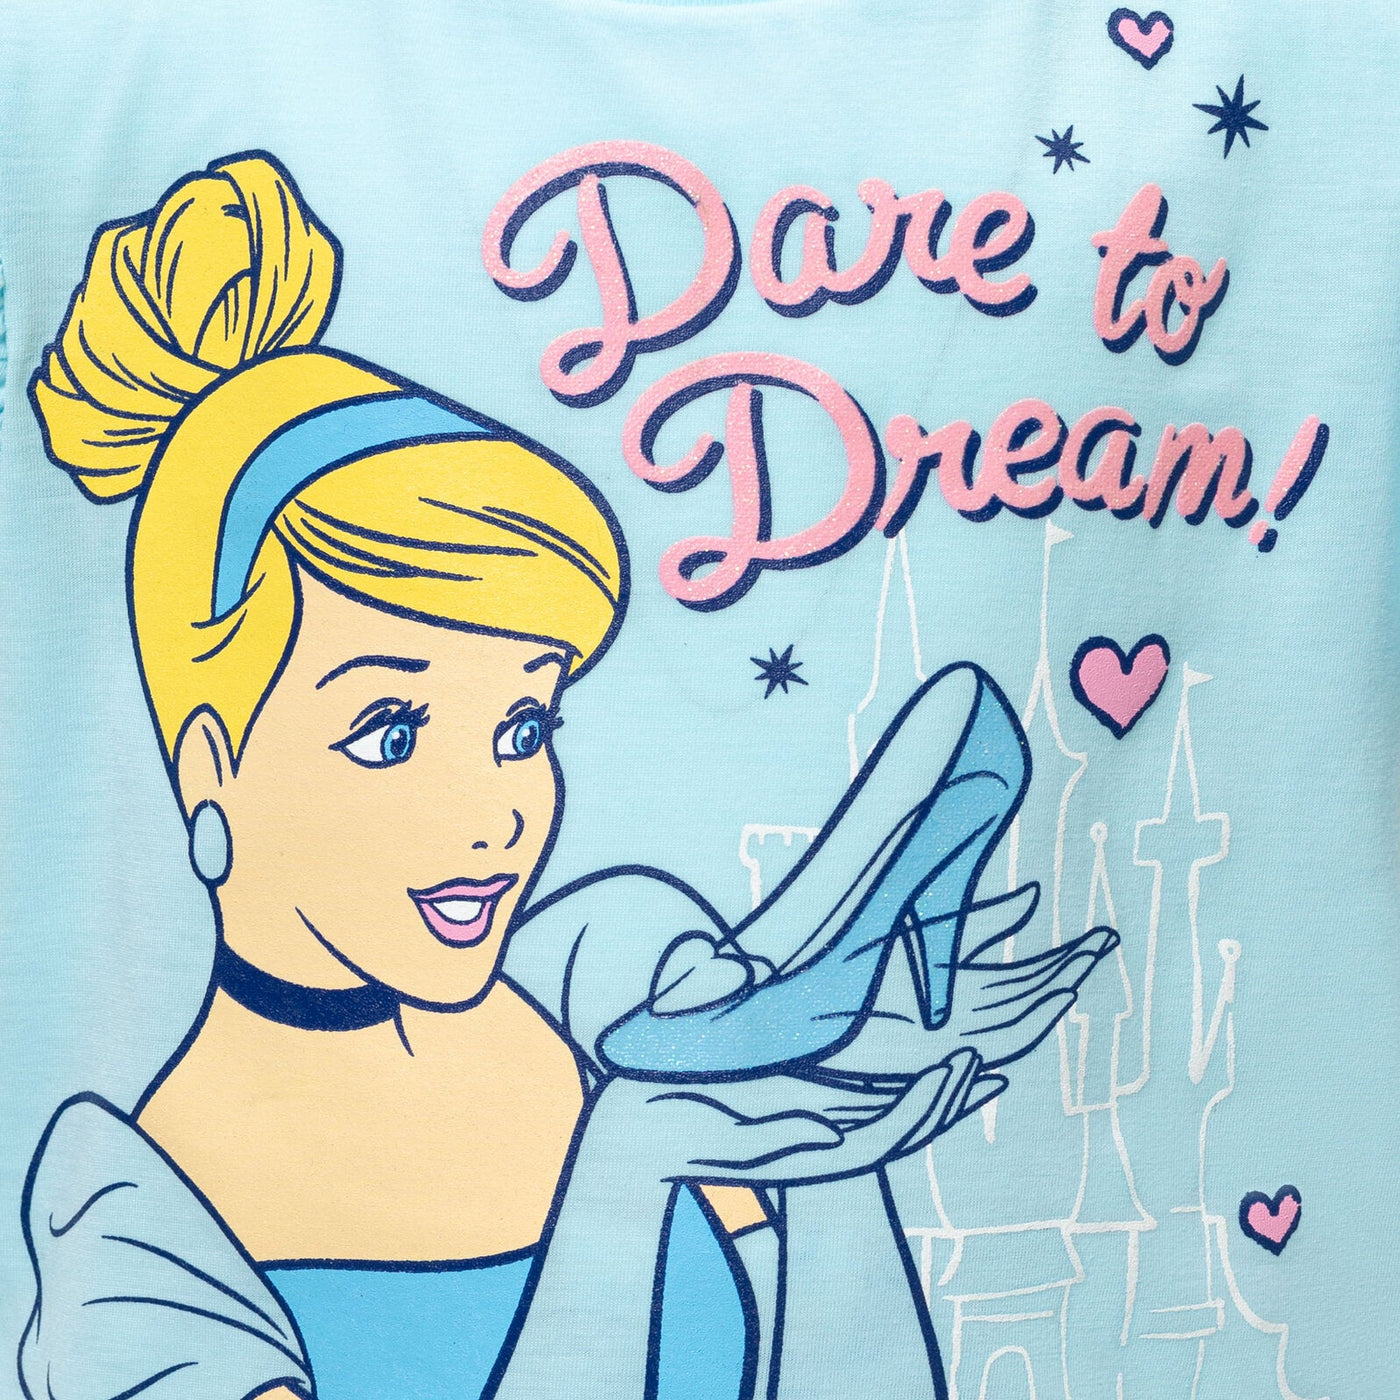 Disney Princess Princess Cinderella T-Shirt and French Terry Shorts Outfit Set - imagikids